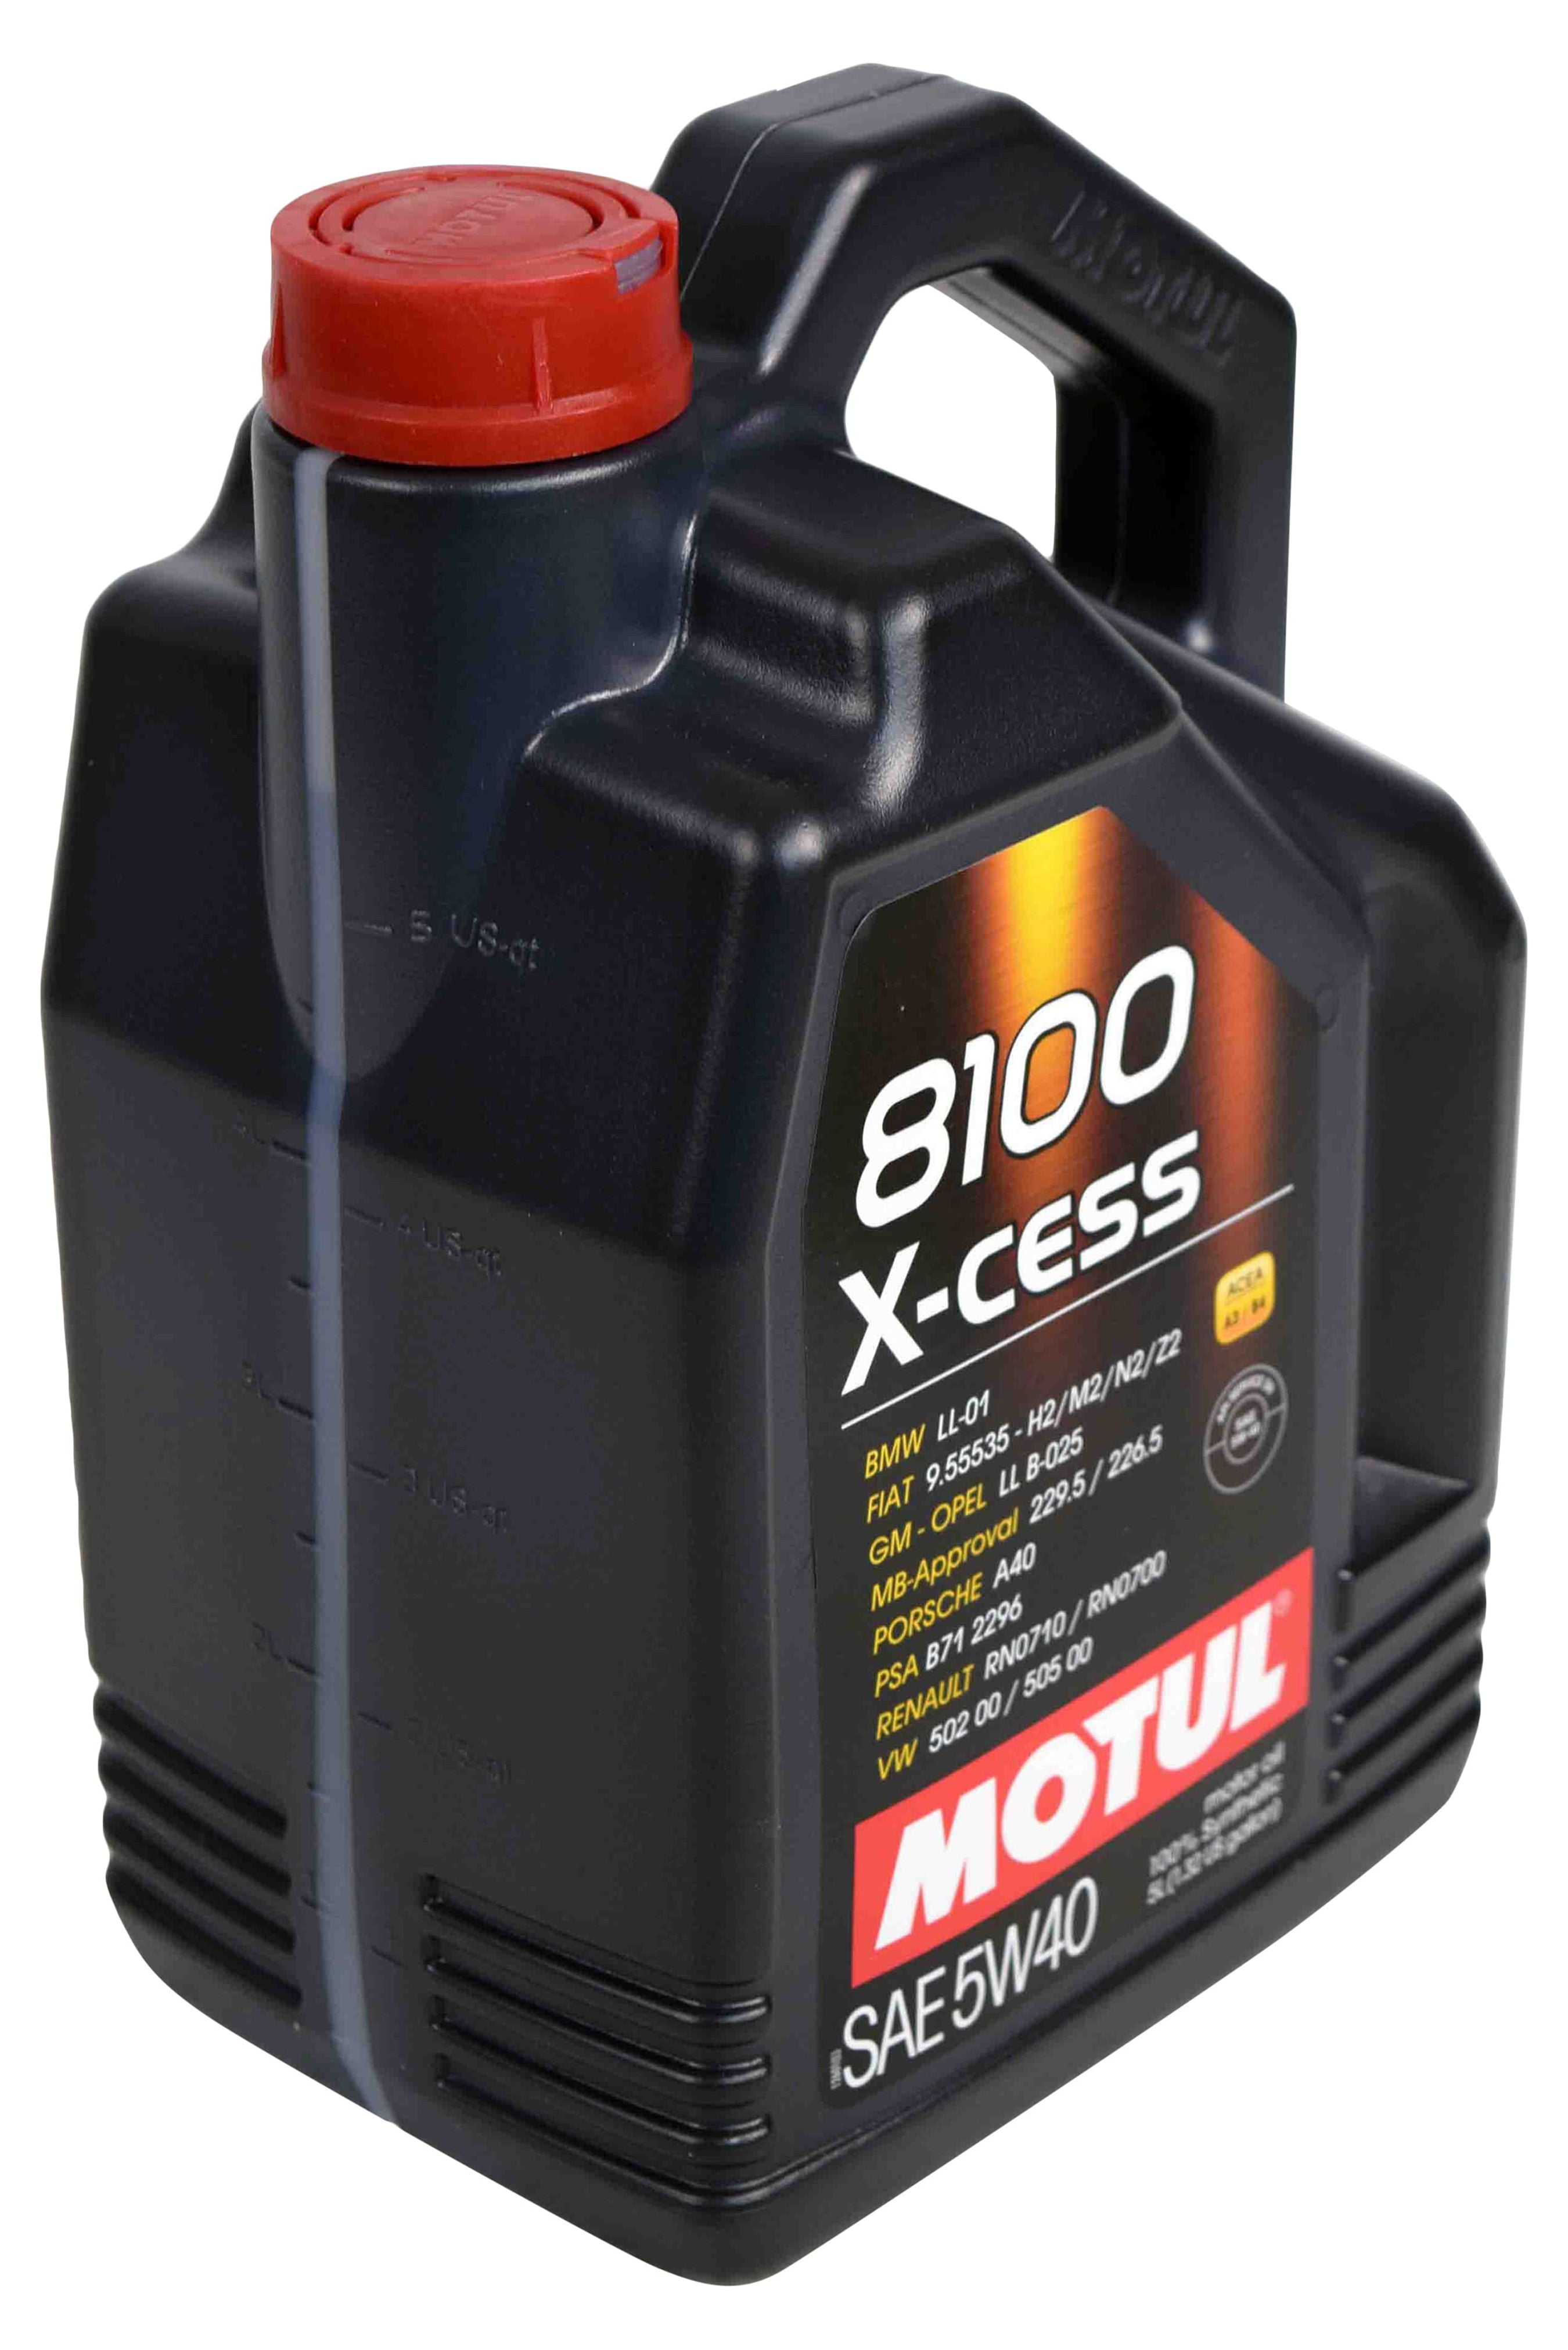 Motul 8100 X-clean 5W40 C3 Engine Oil (1 Liter) 102050 by Motul